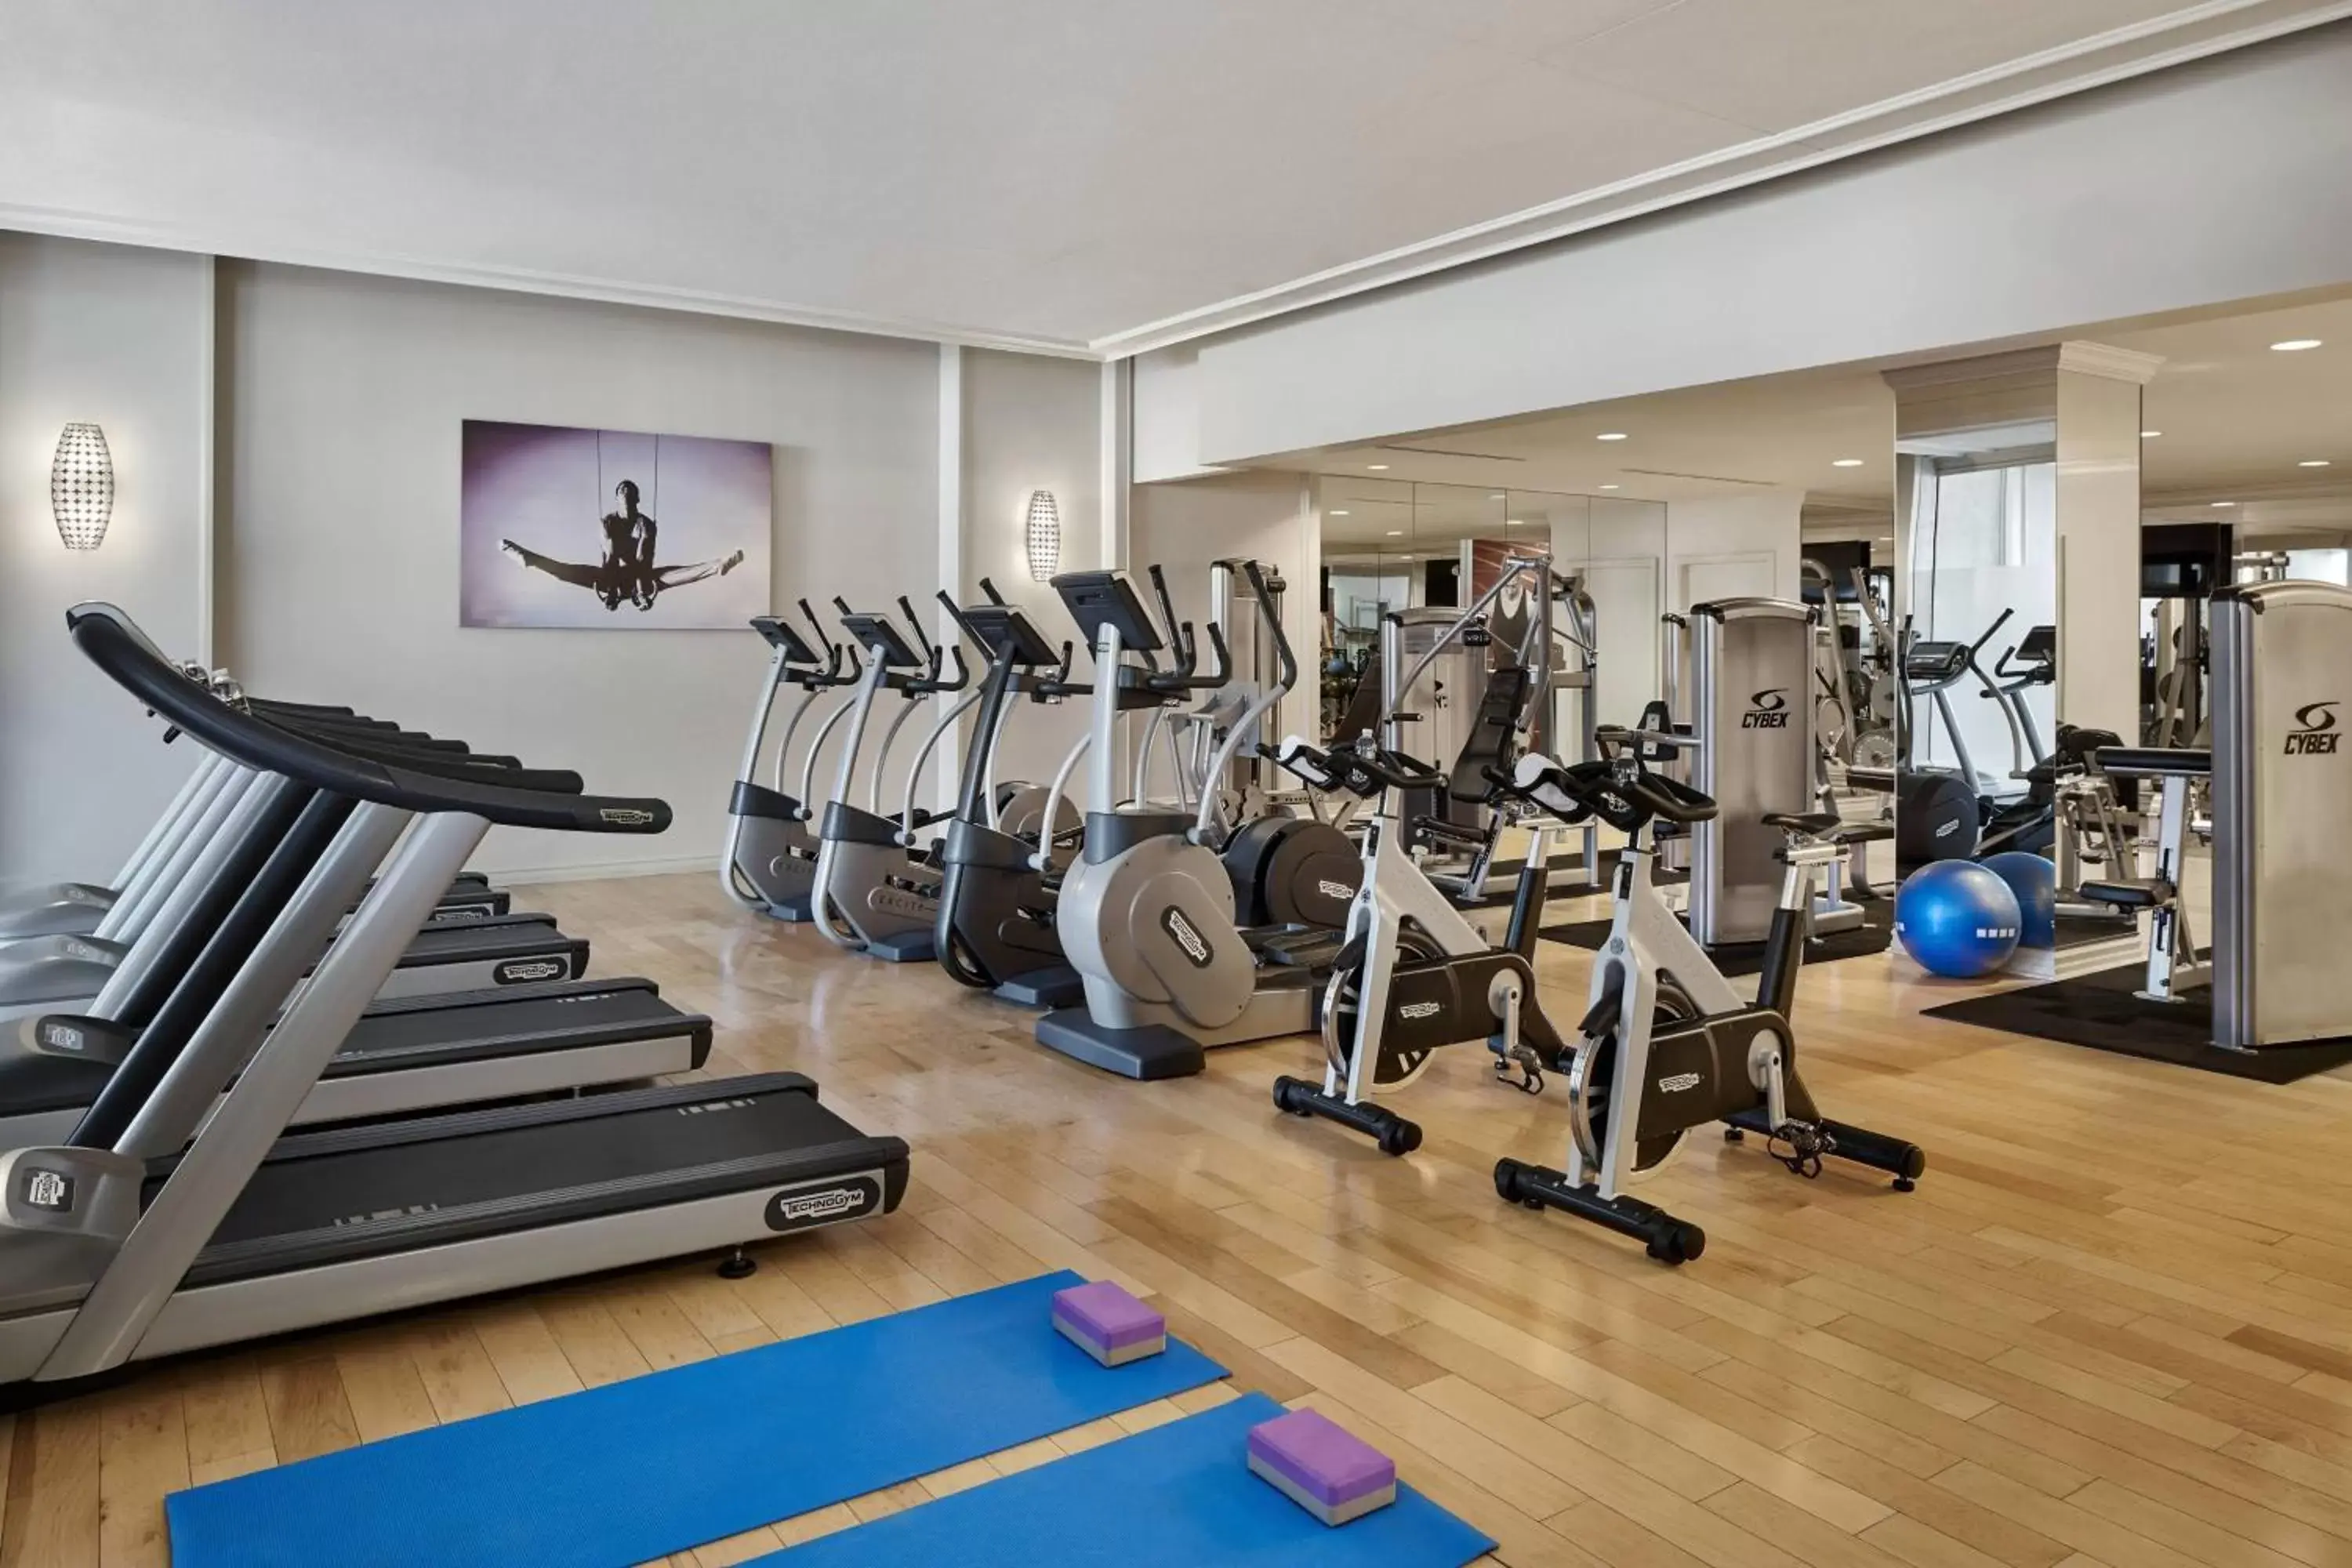 Fitness centre/facilities, Fitness Center/Facilities in The Ritz Carlton, Pentagon City